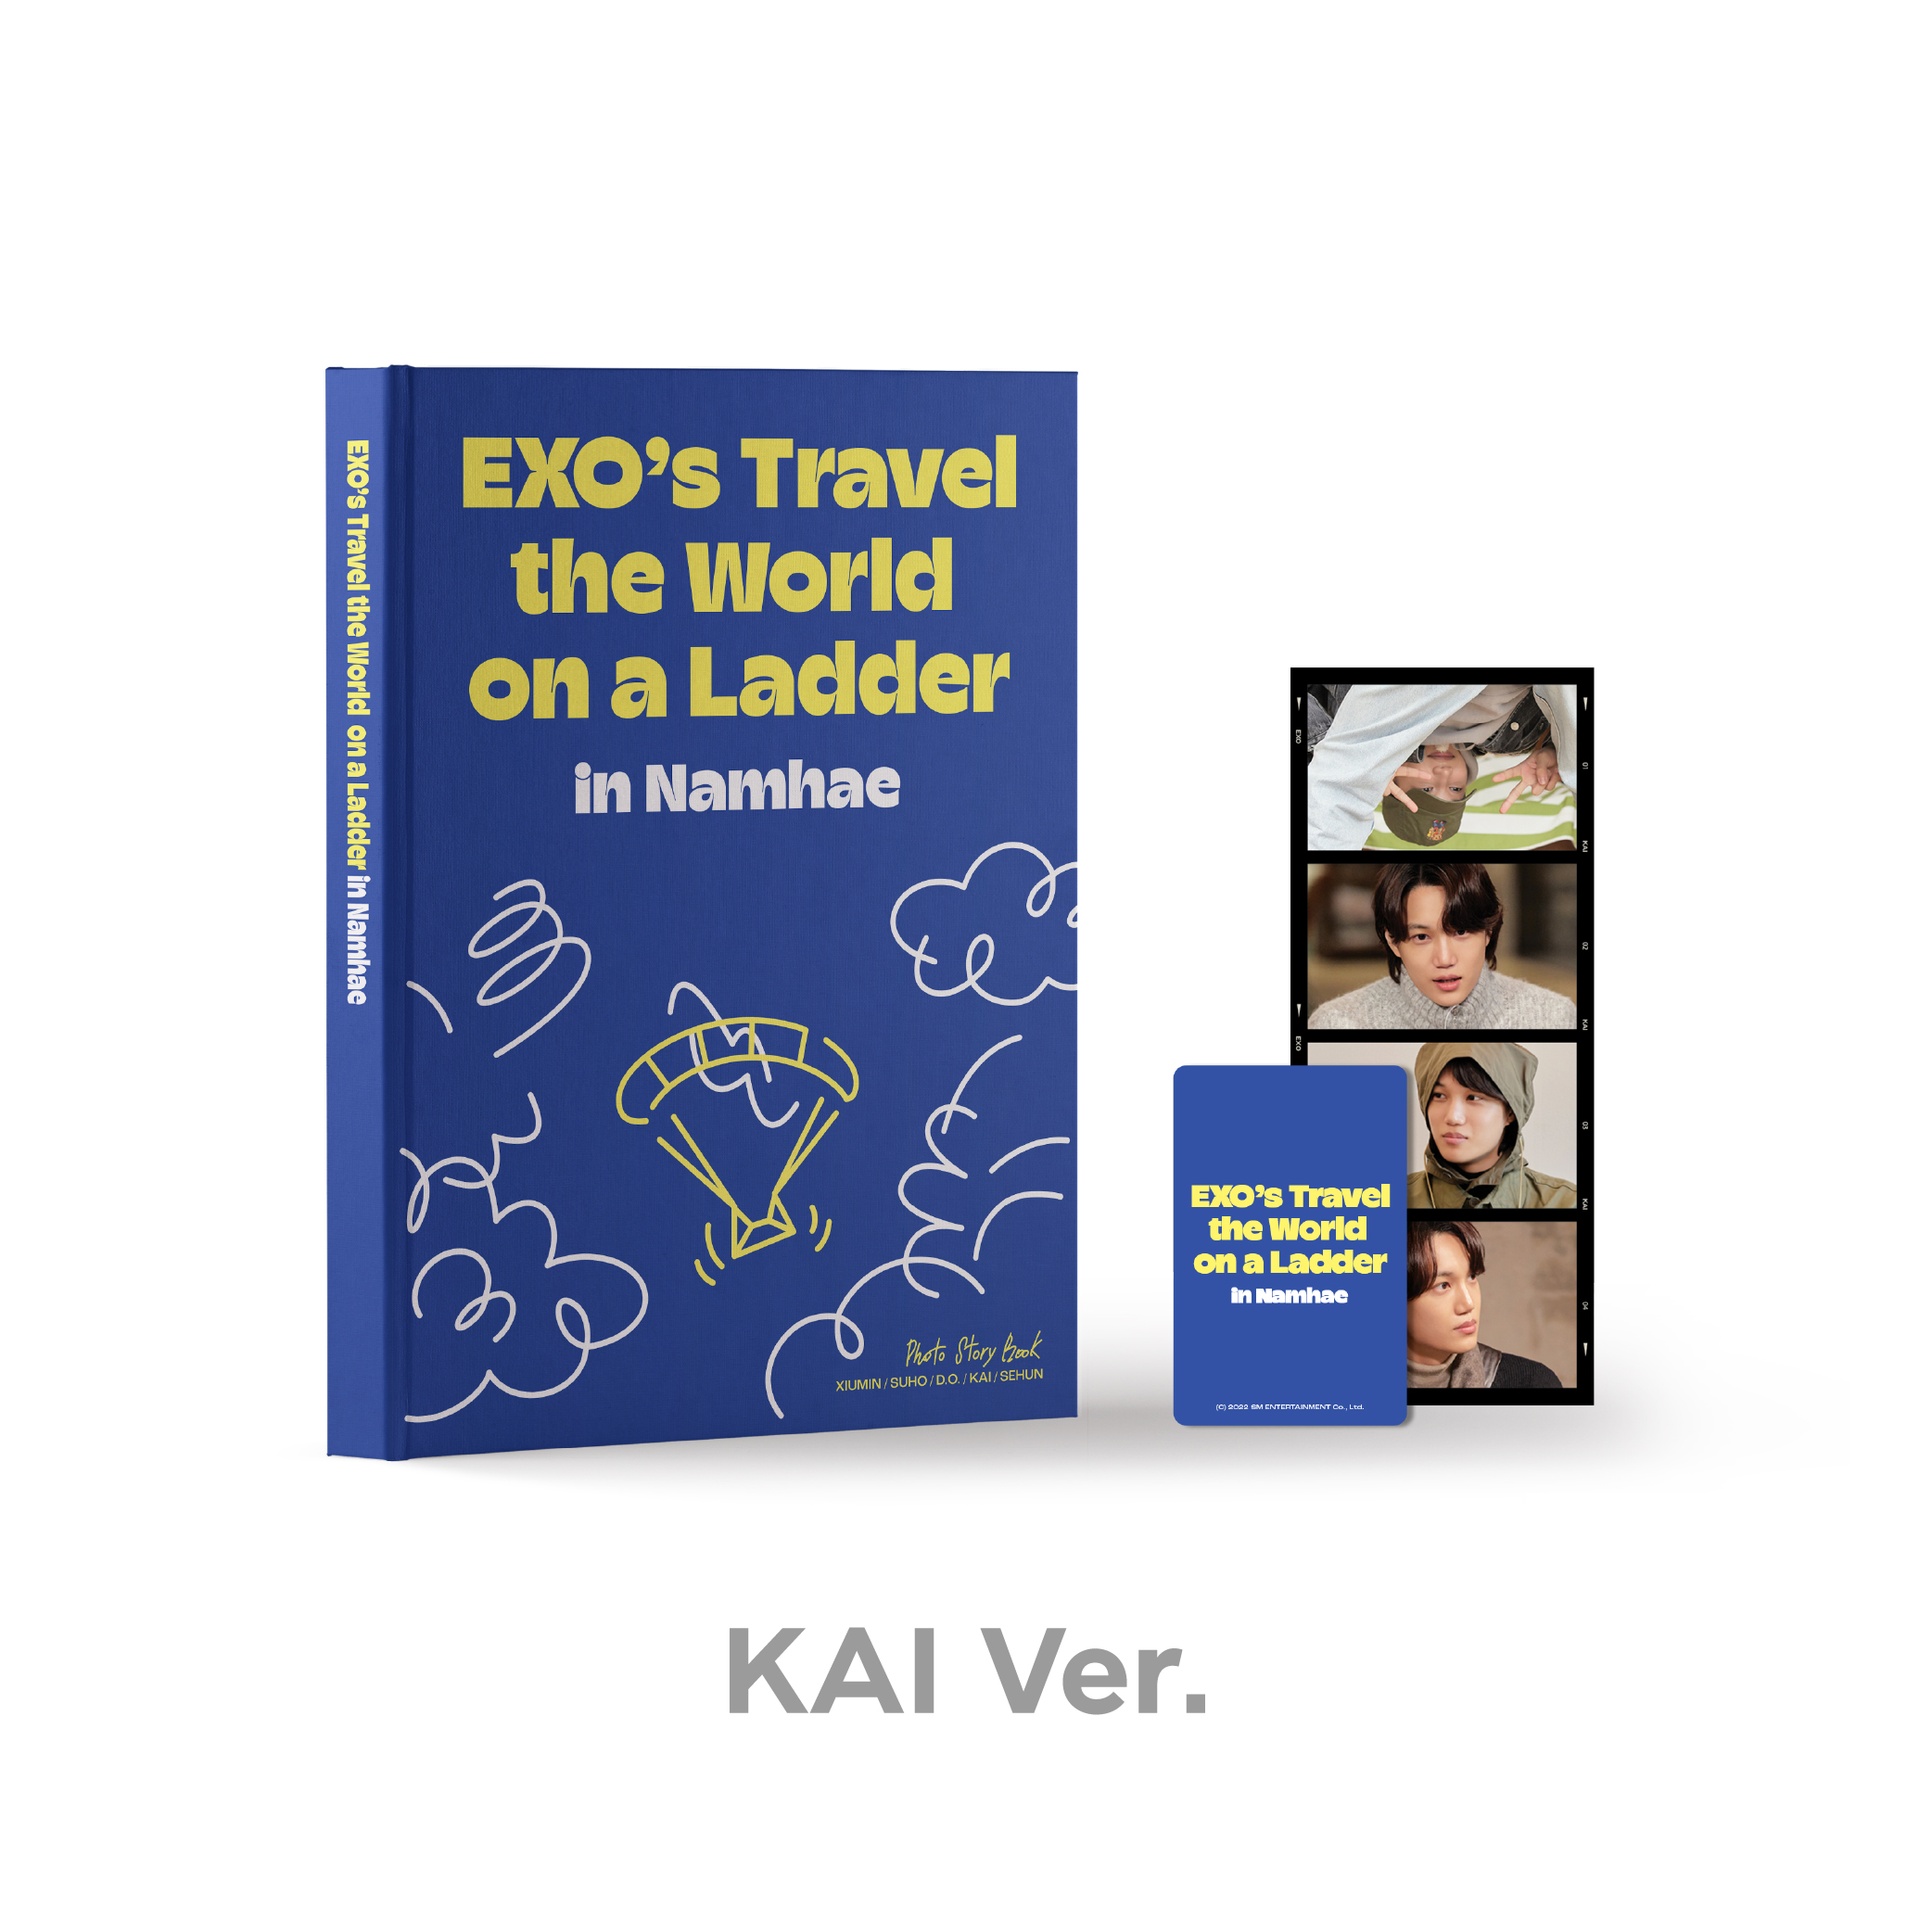 EXO - 엑소의 사다리 타고 세계여행 - 남해 편 PHOTO STORY BOOK [KAI Ver.]